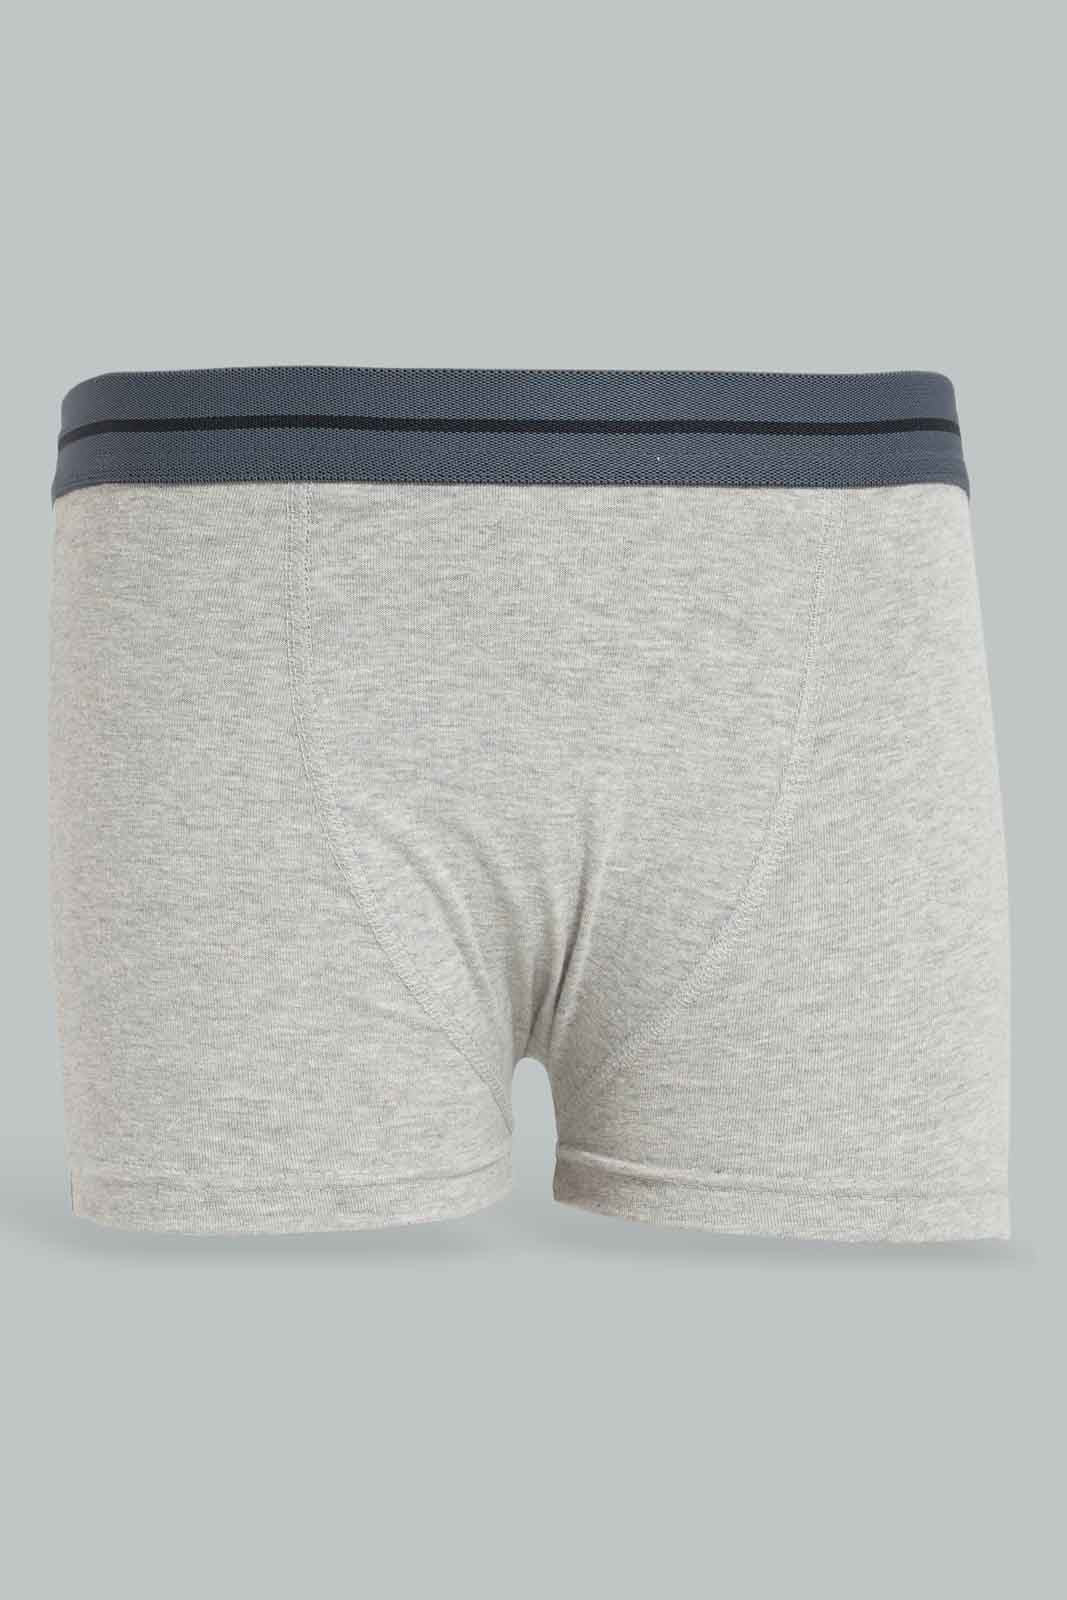 Women's Long Bamboo Boyshorts Underwear – Meta Bamboo